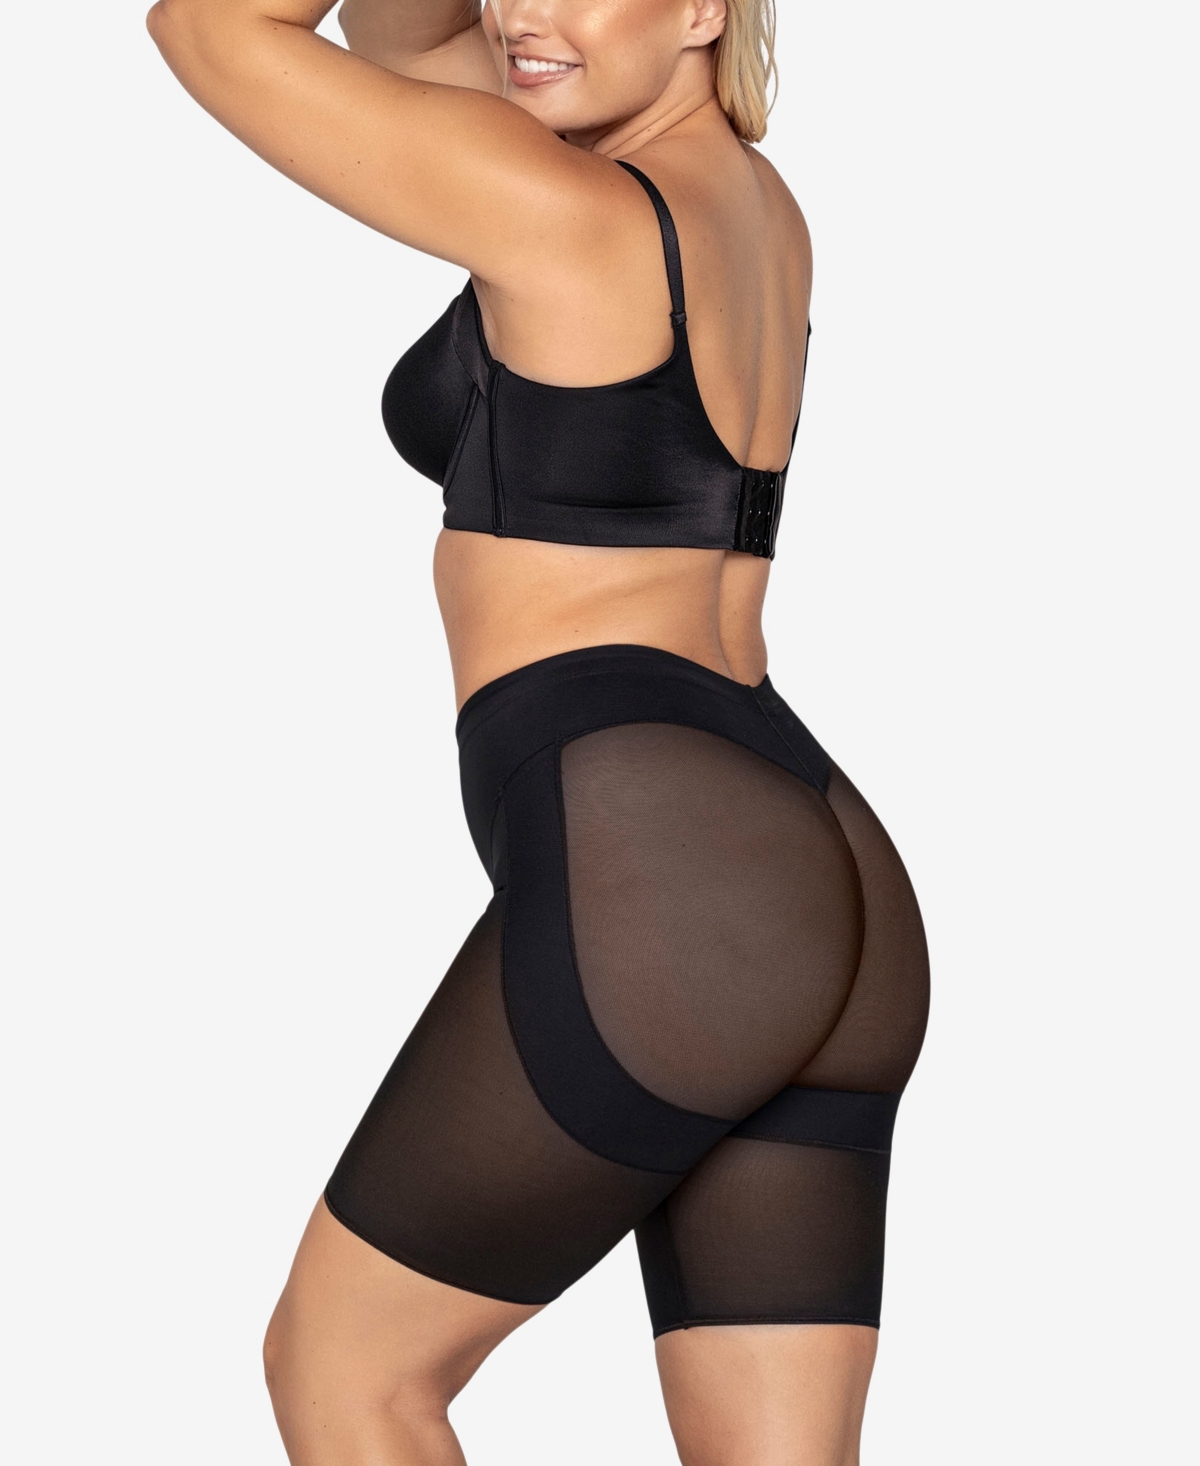 Women's Firm Compression Butt Lifter Shaper Shorts - Black